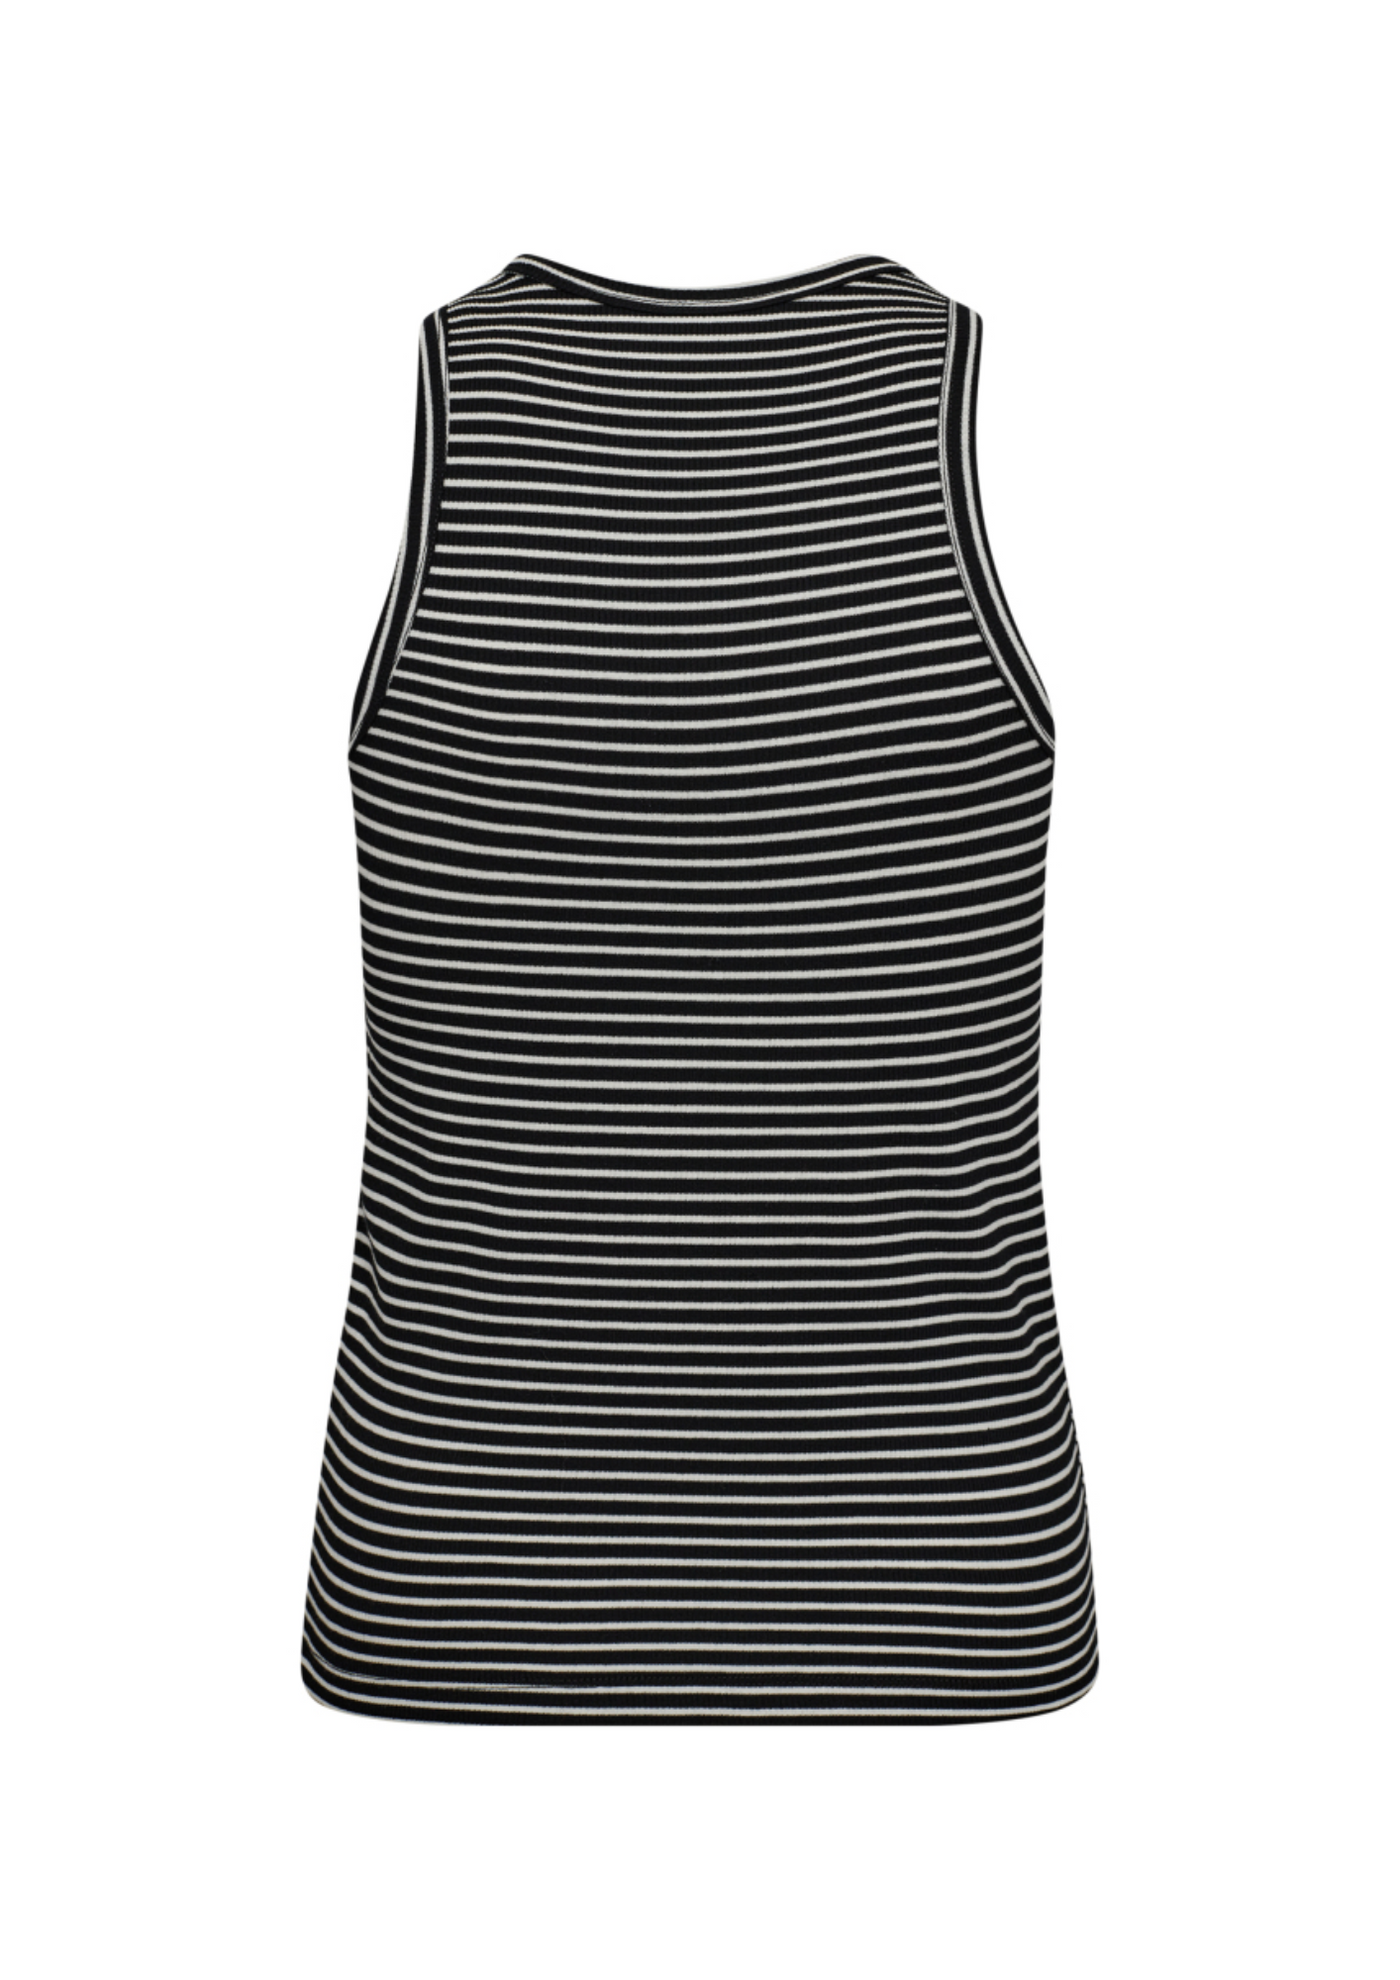 Co' Couture | SaraCC Stripe Rib Top White/Black